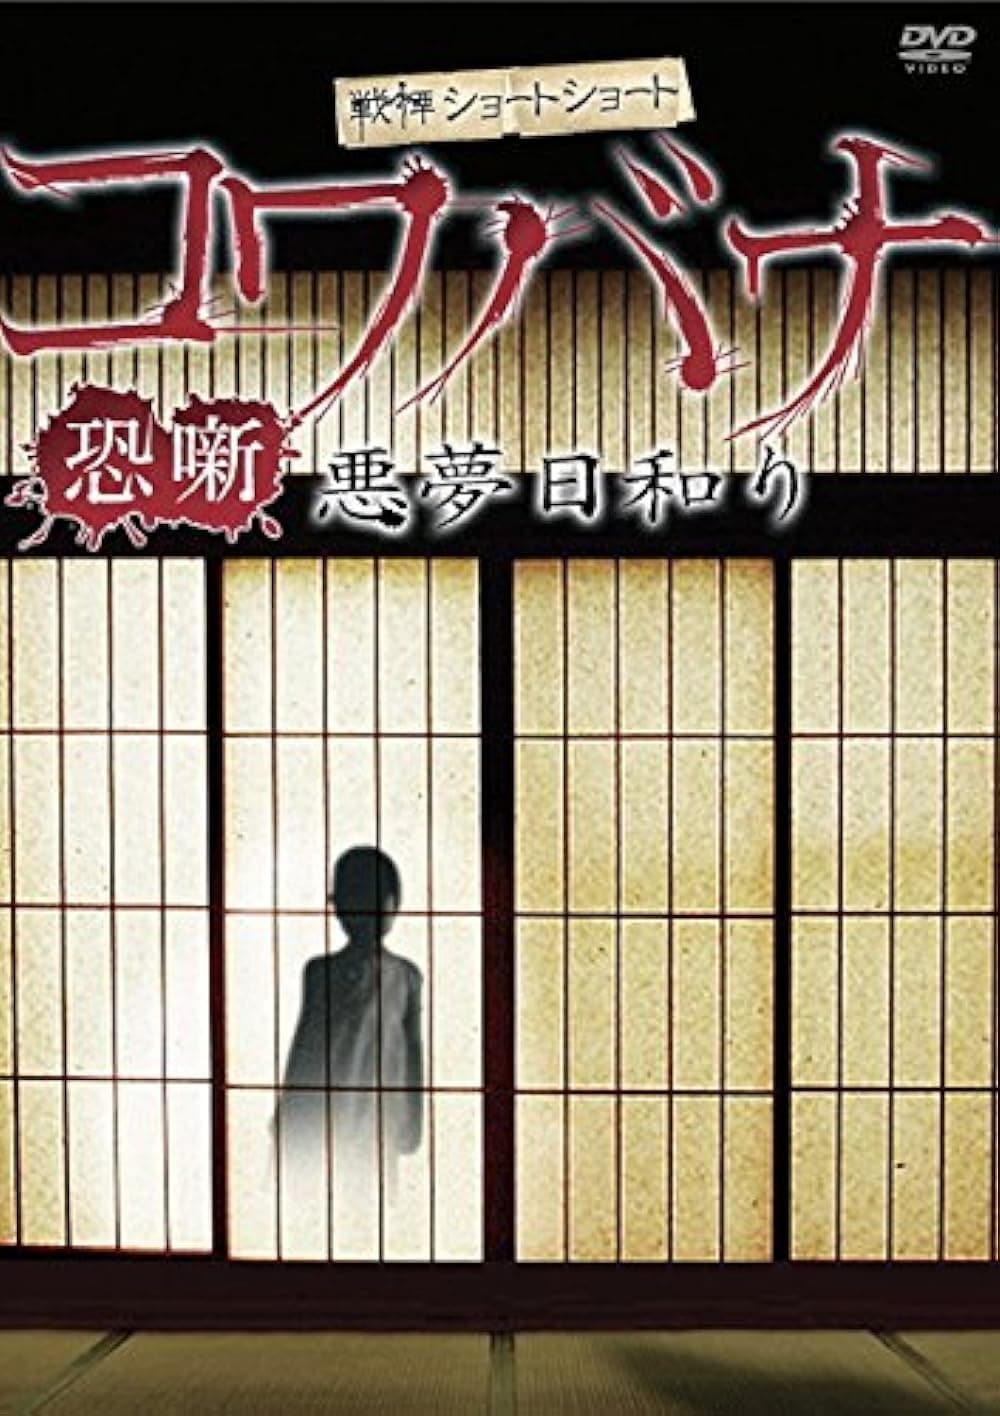 Spine-Chilling Short Stories Kowabana: Nightmare Weather